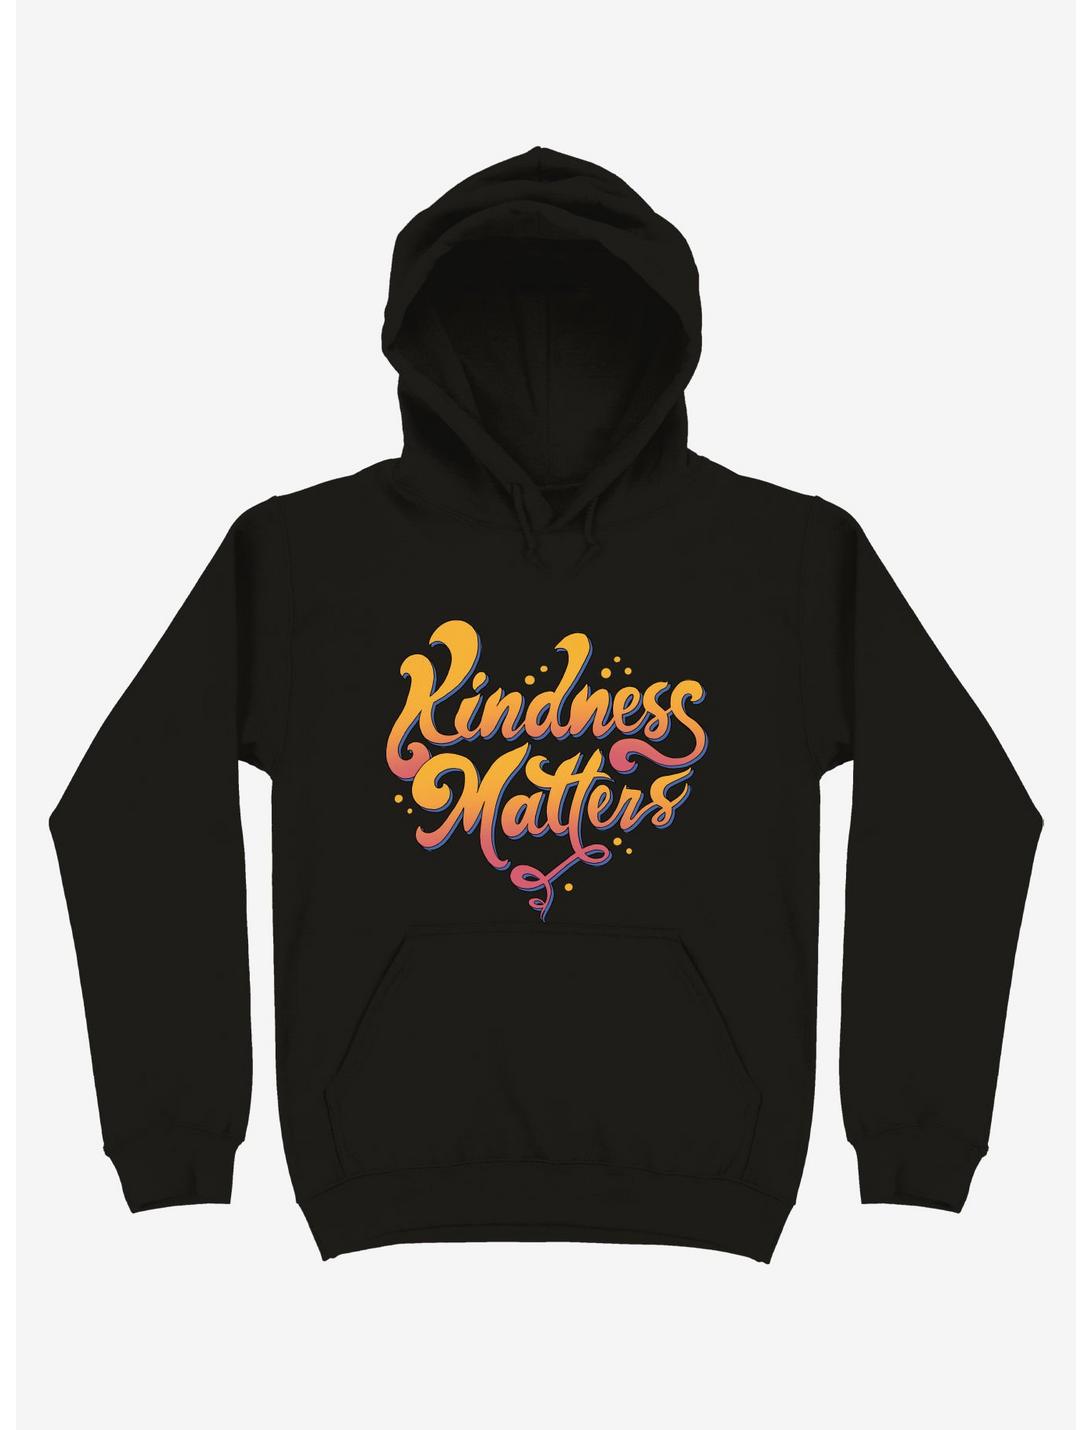 Kindness Matters Black Hoodie, BLACK, hi-res